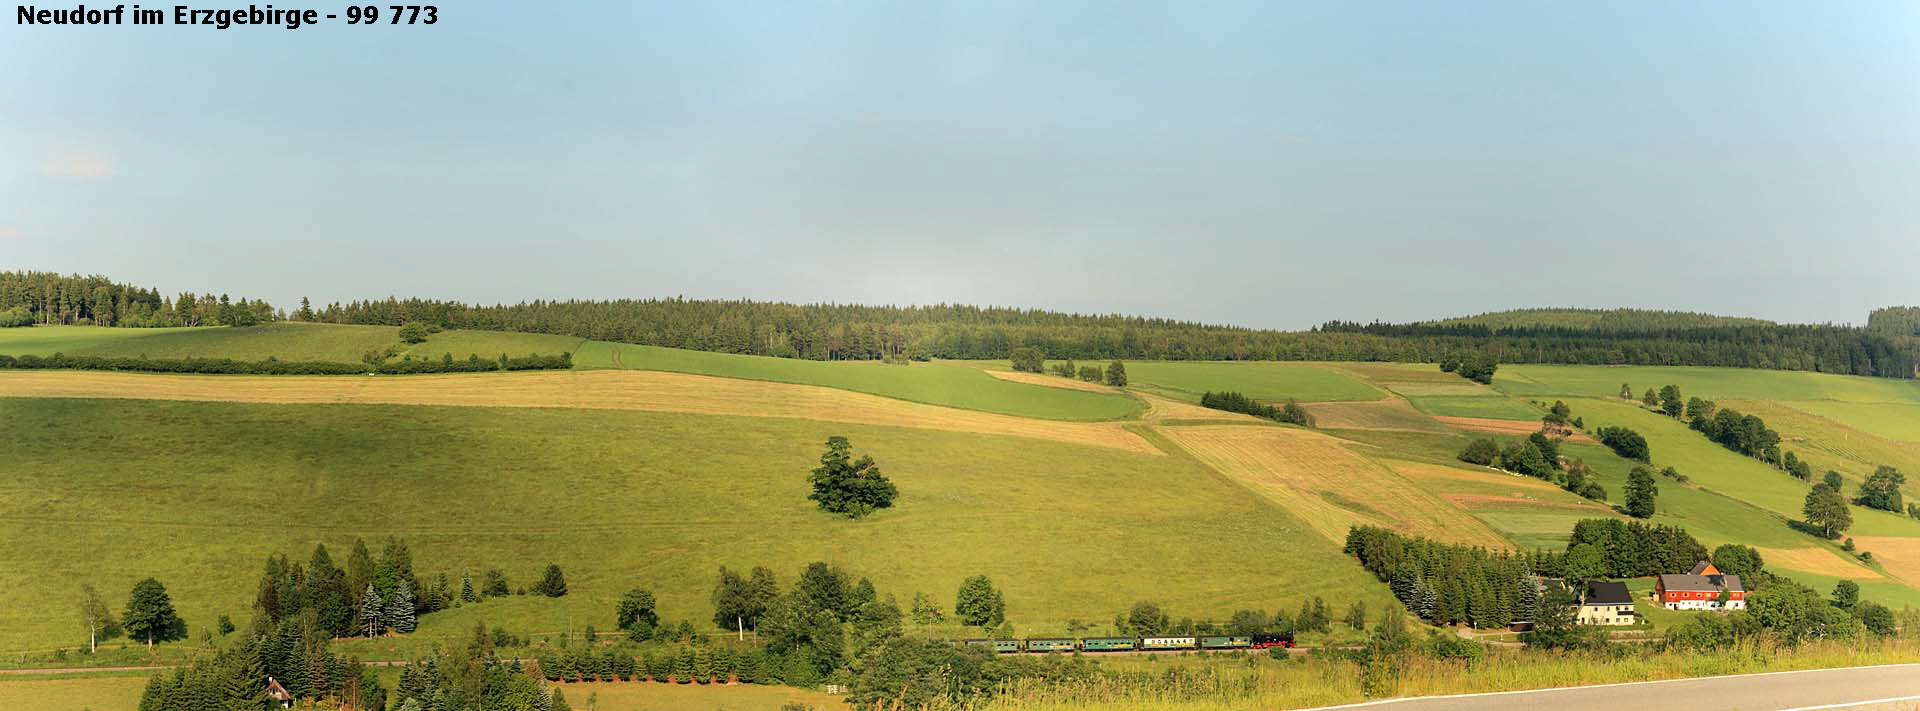 Neudorf im Erzgebirge - 99 773